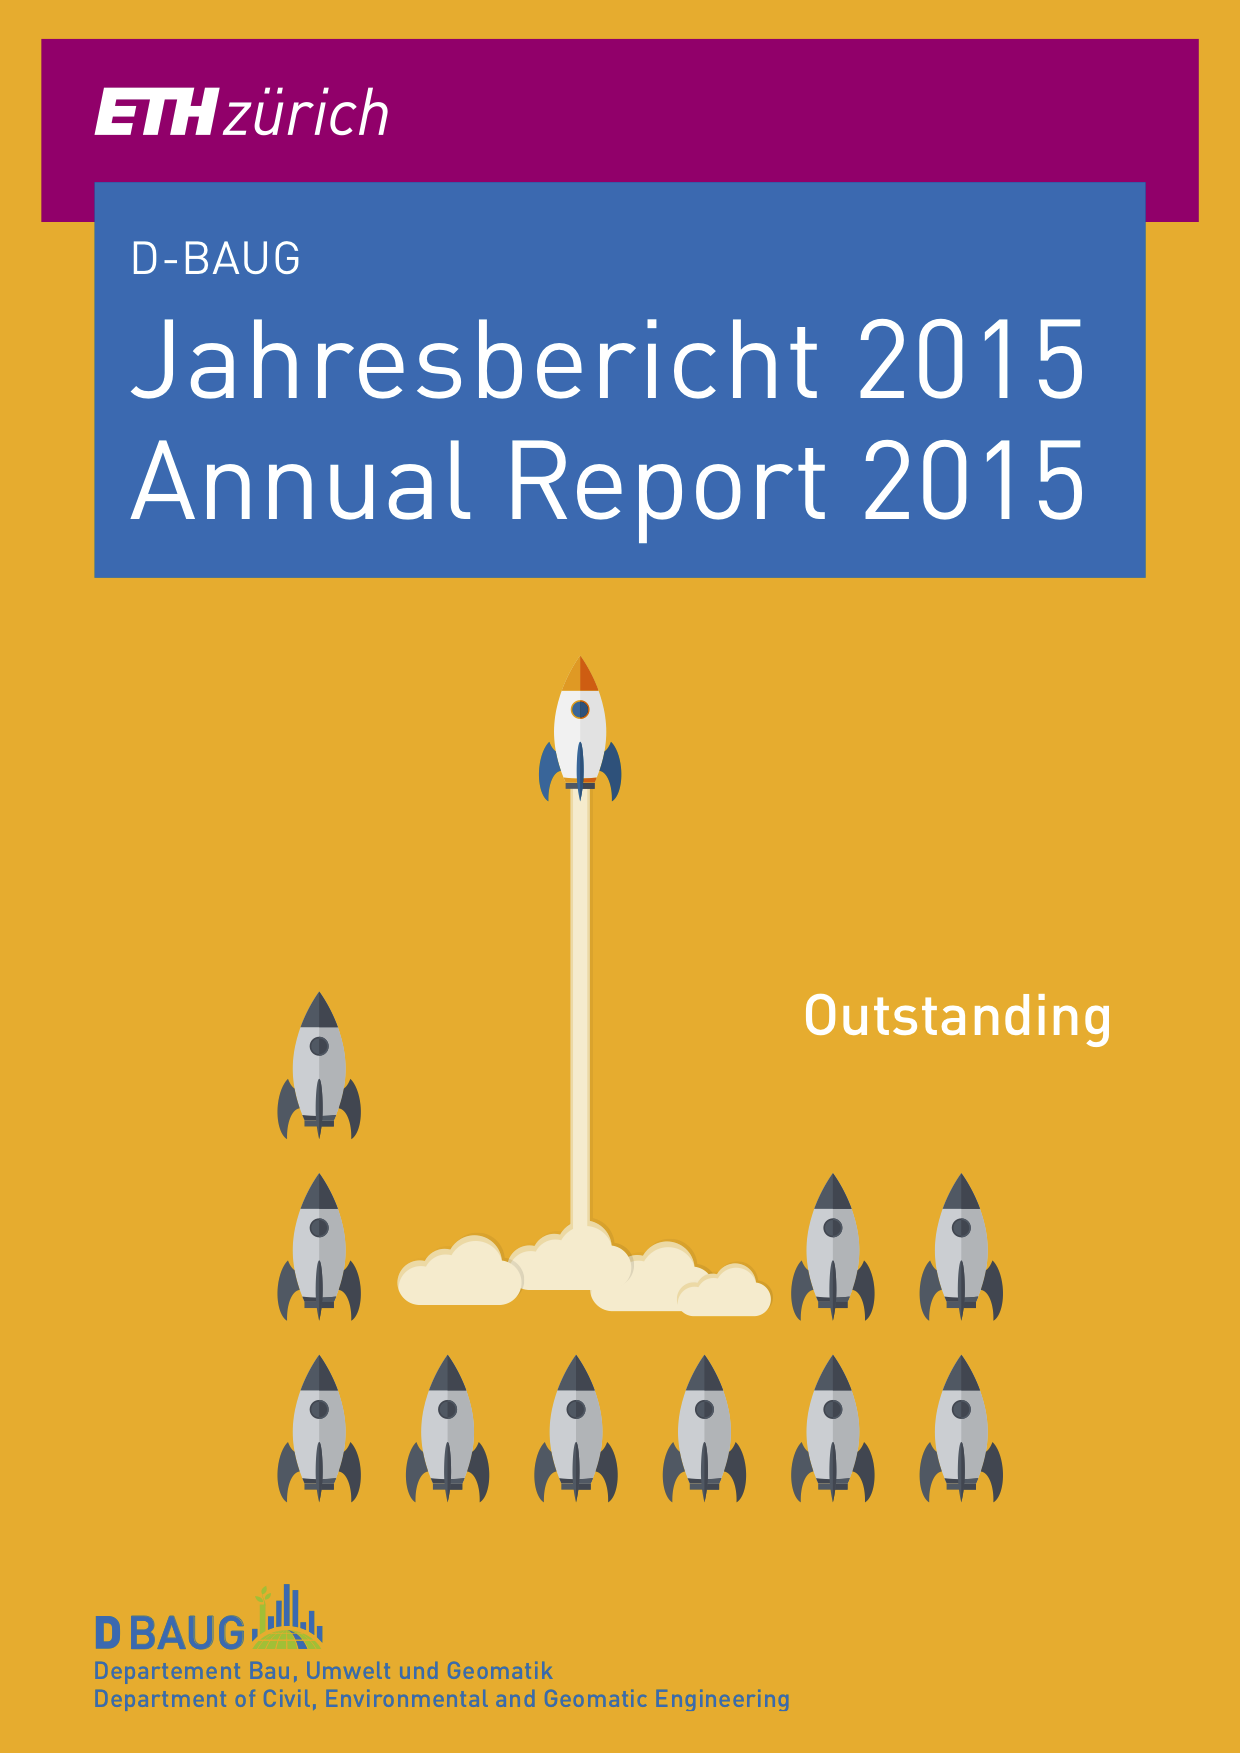 D-BAUG Annual report 2015